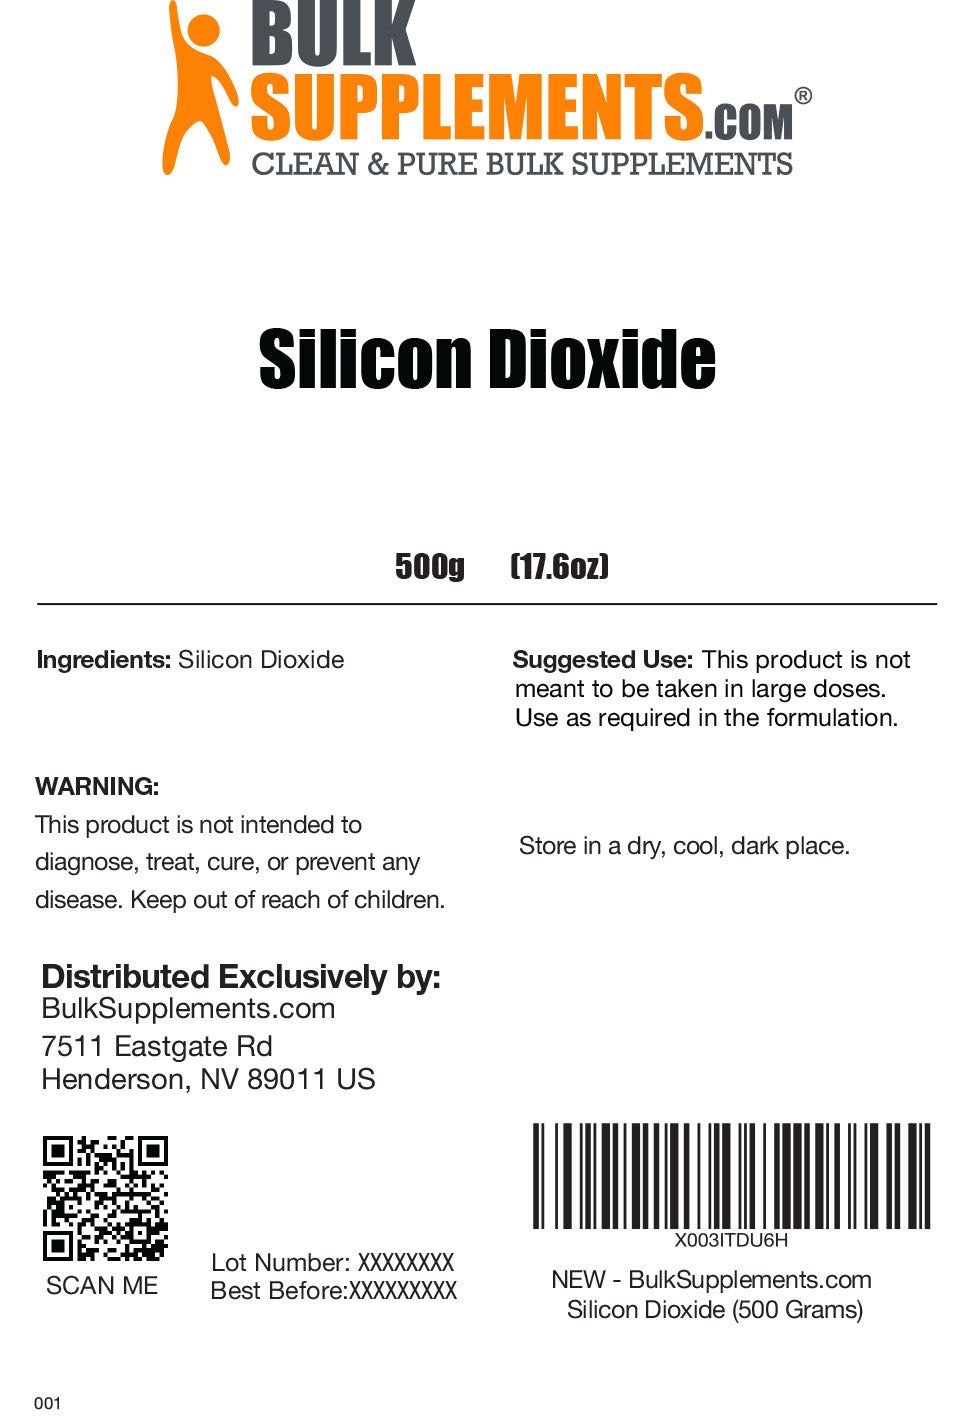 Silicon Dioxide powder label 500g